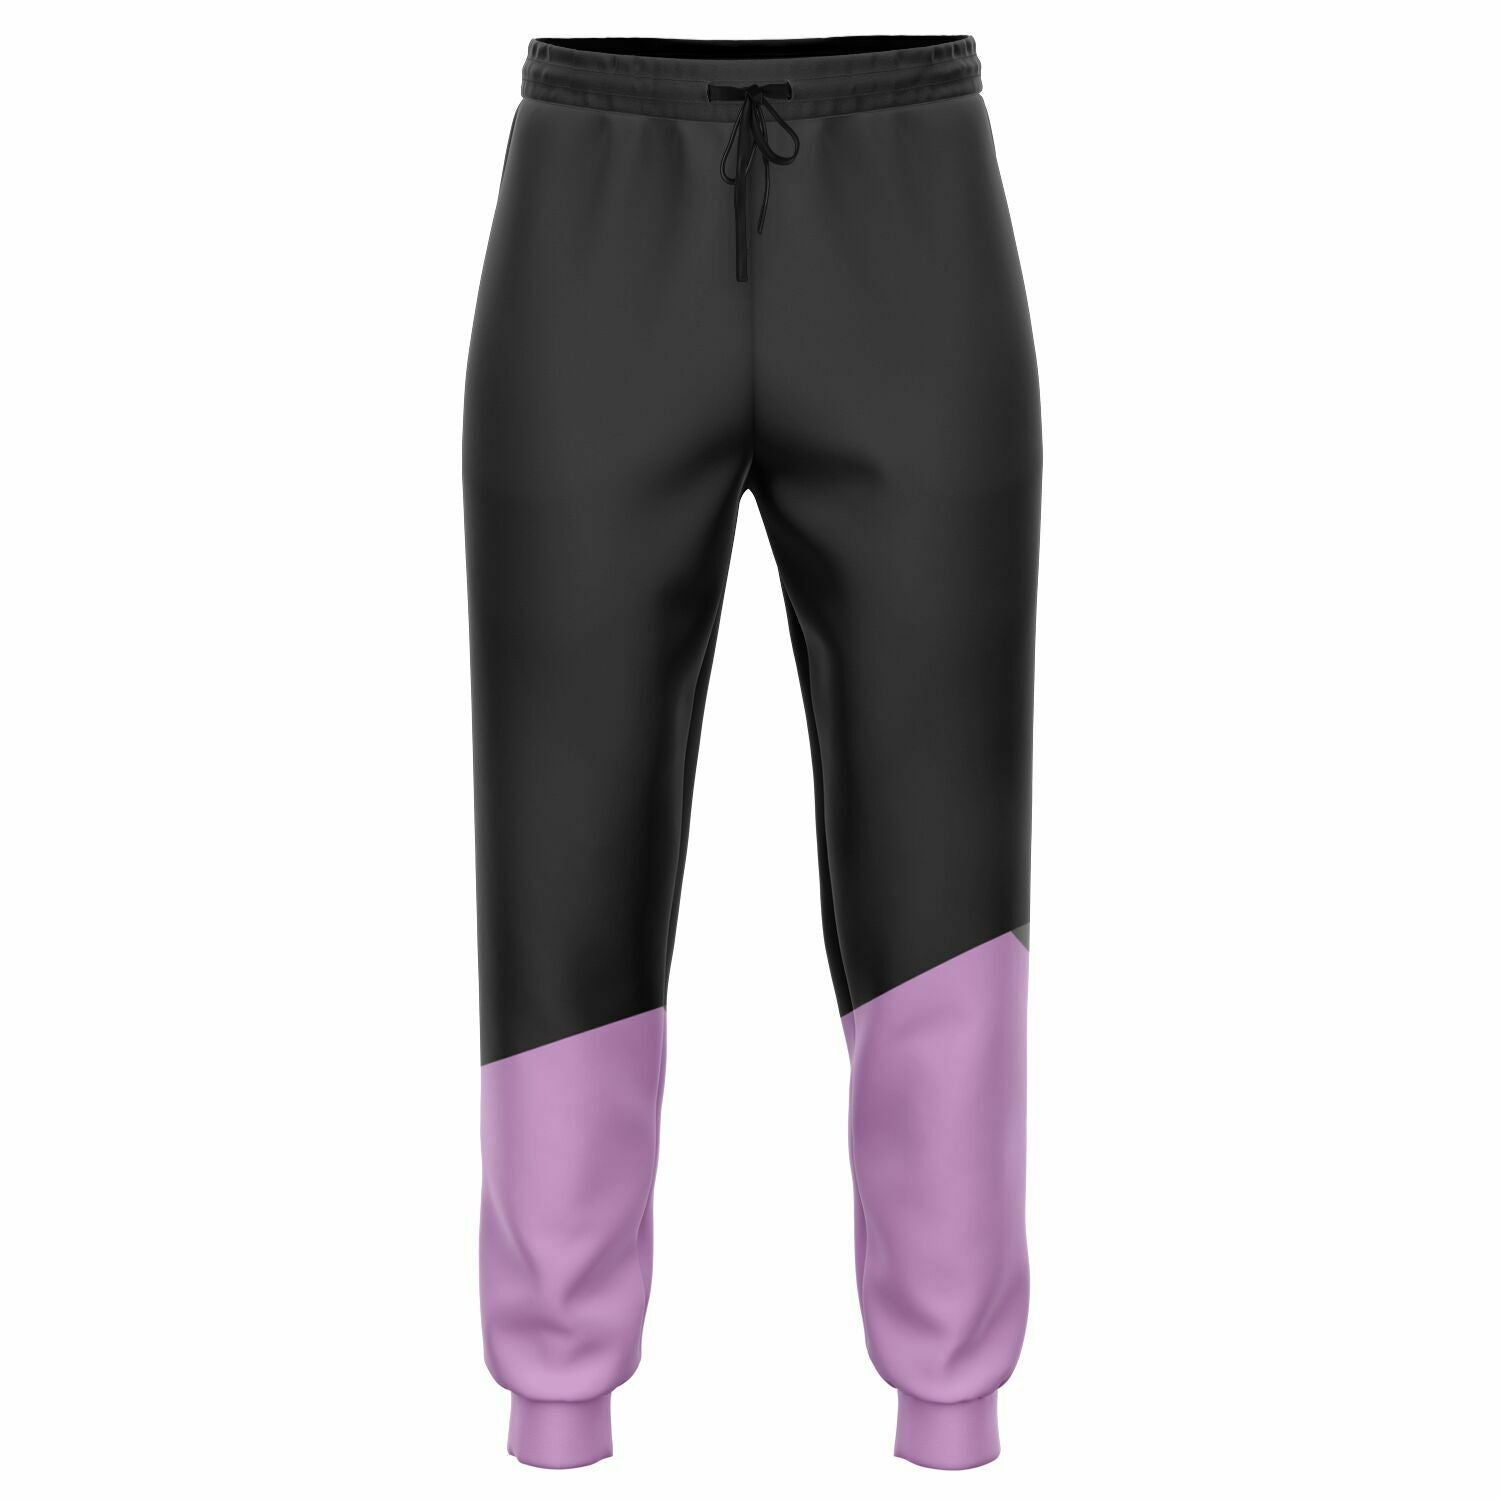 Black and pink Fashion Jogger